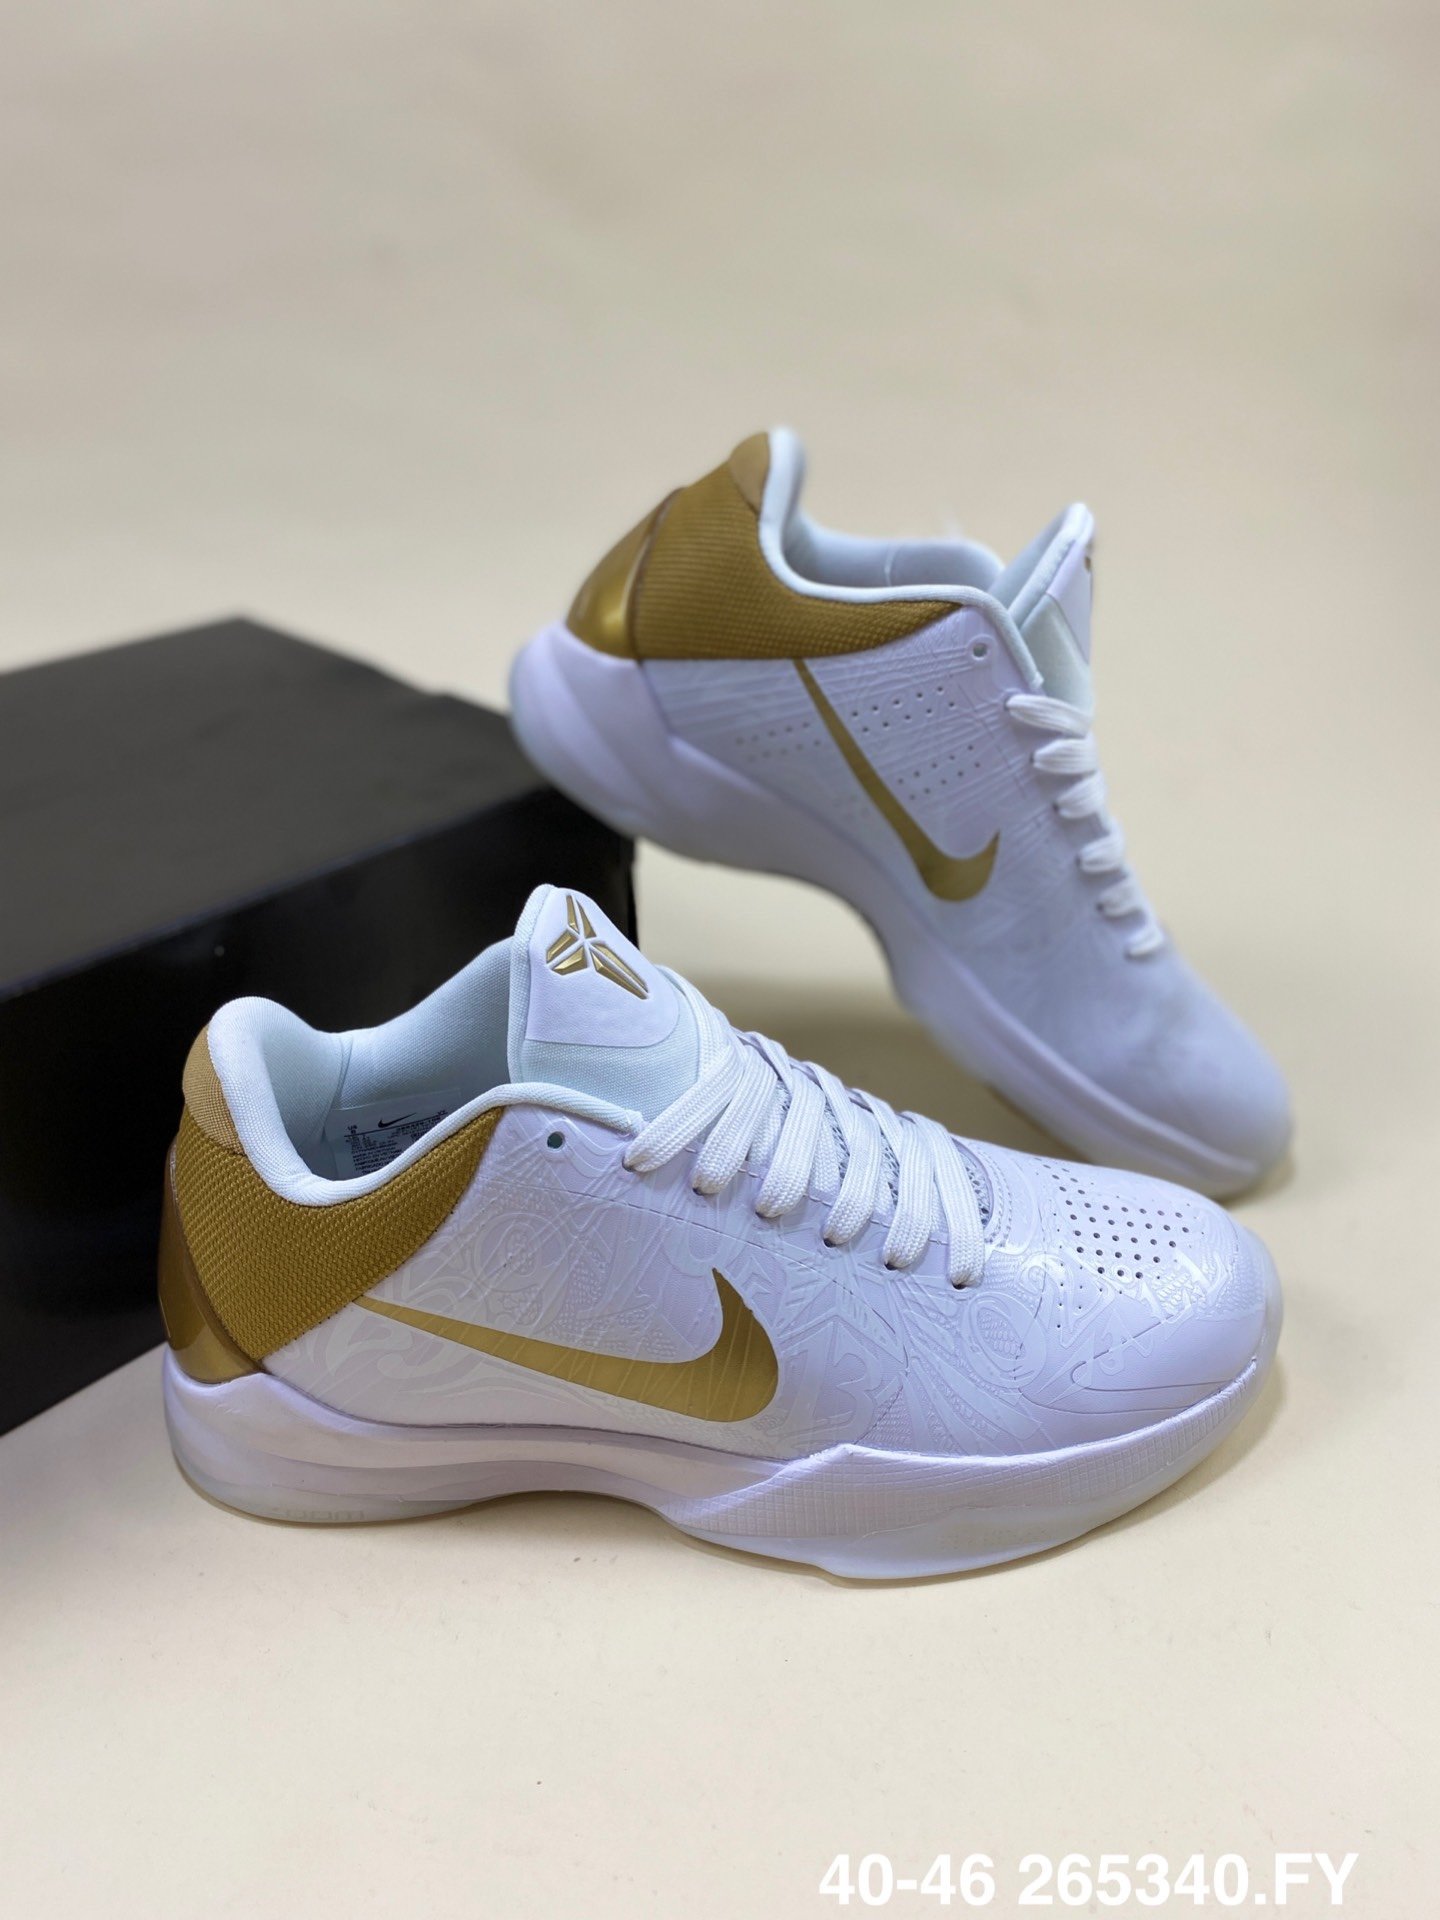 Nike Zoom Kobe 5 White Gold Shoes